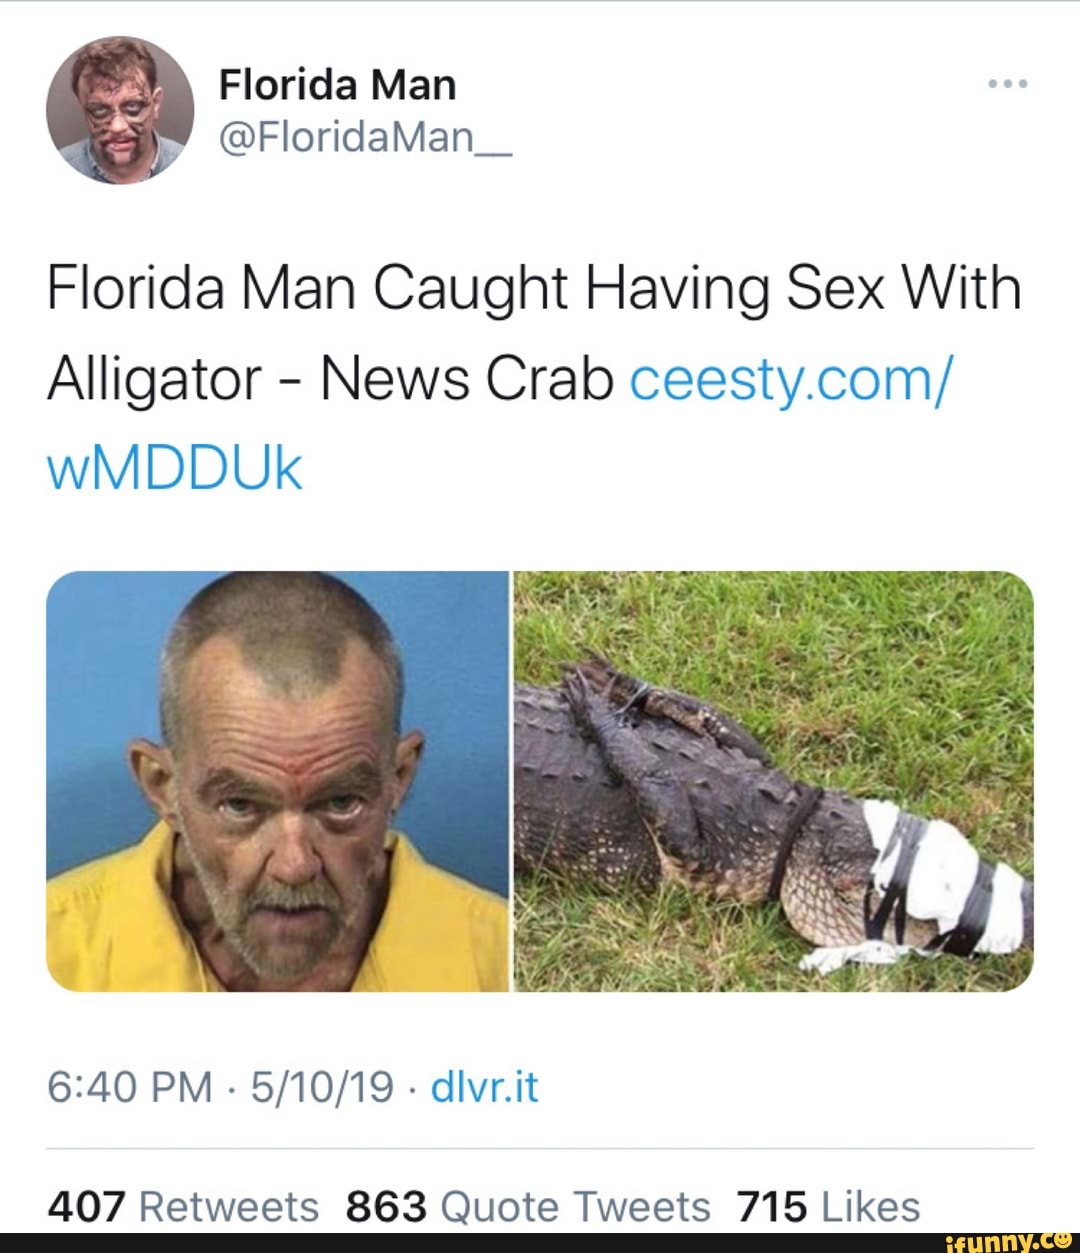 Florida Man Caught Having Sex With Alligator News Crab Wmdduk Pm Dlvrit Ifunny